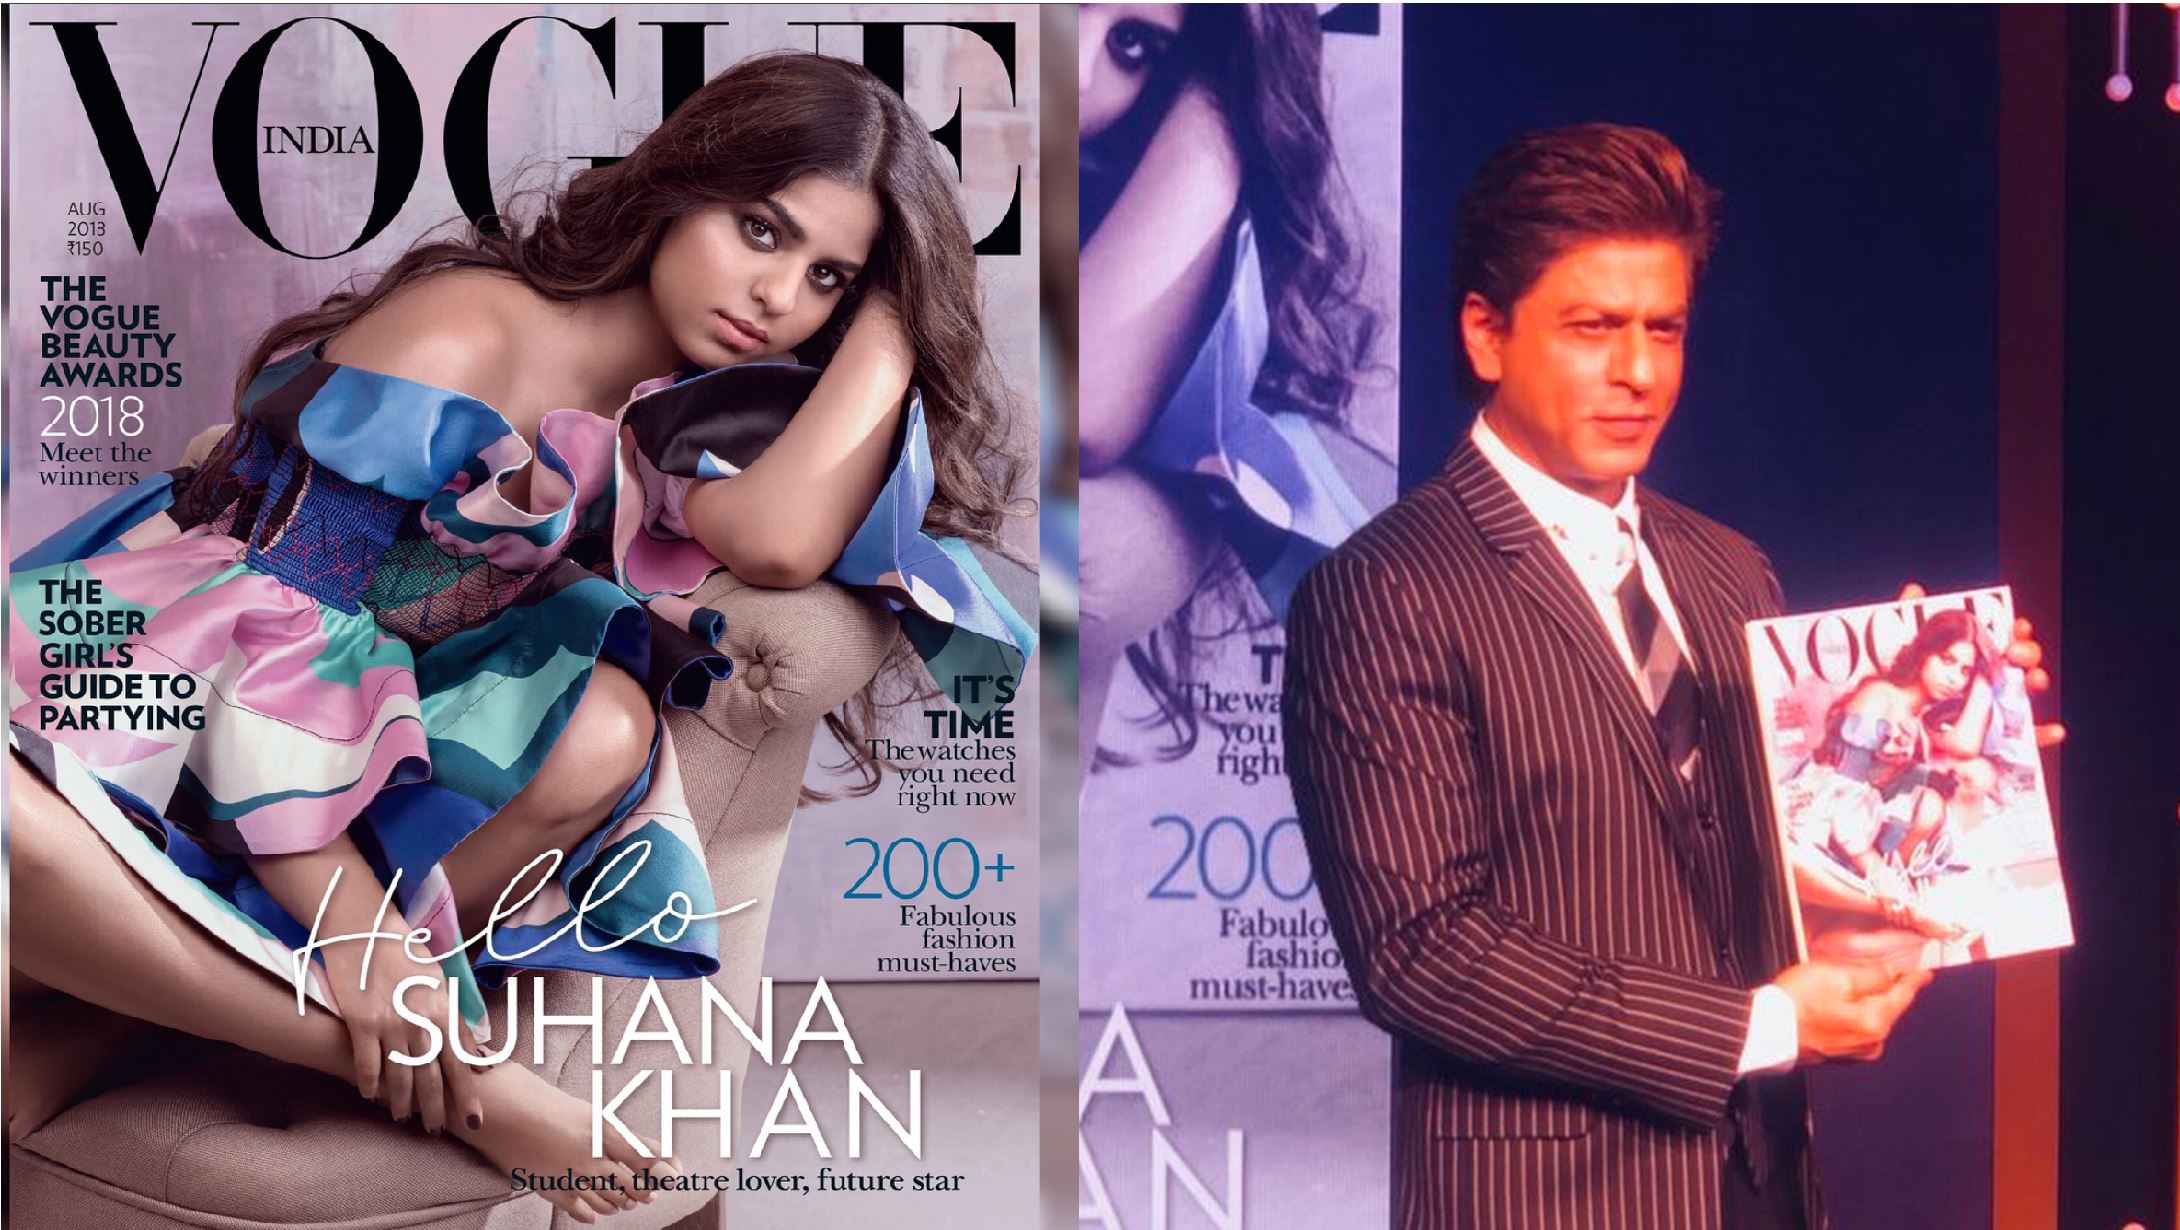 Vogue India featured Suhana Khan